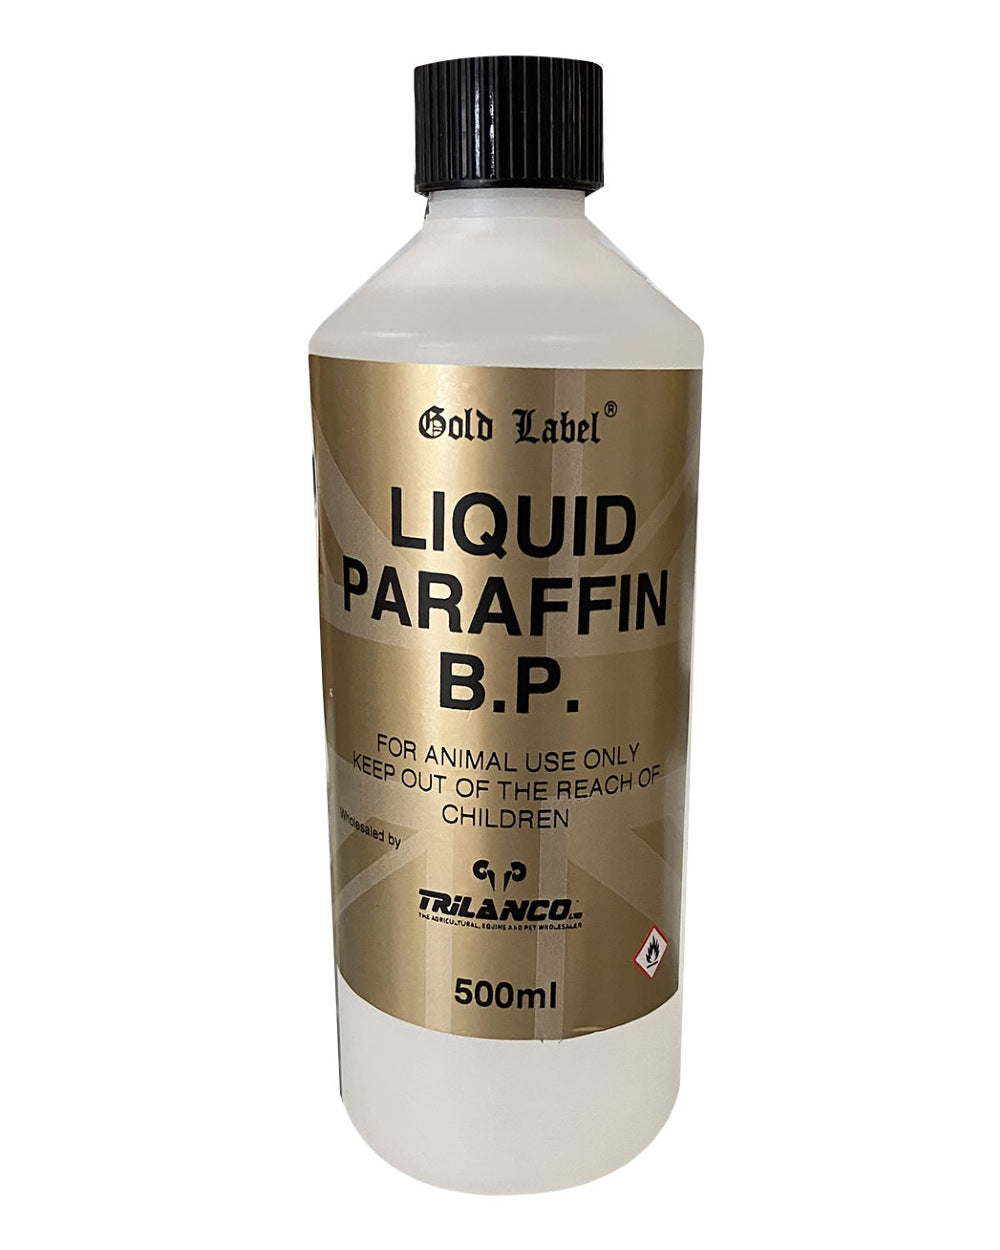 Gold Label Liquid Paraffin B.P. On A White Background